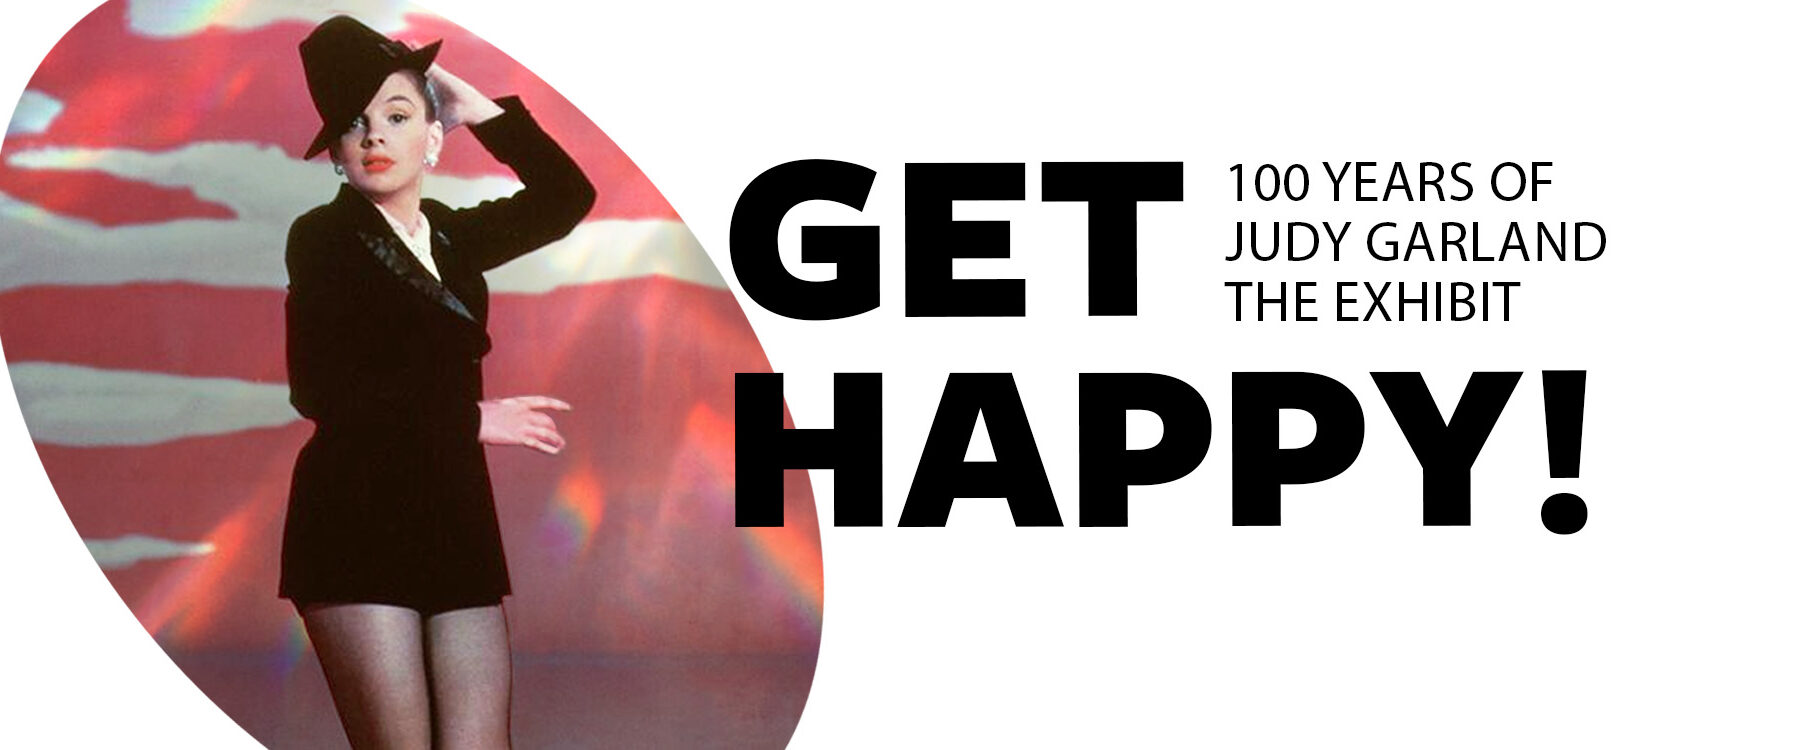 Get Happy! 100 Years of Judy Garland, The Exhibit